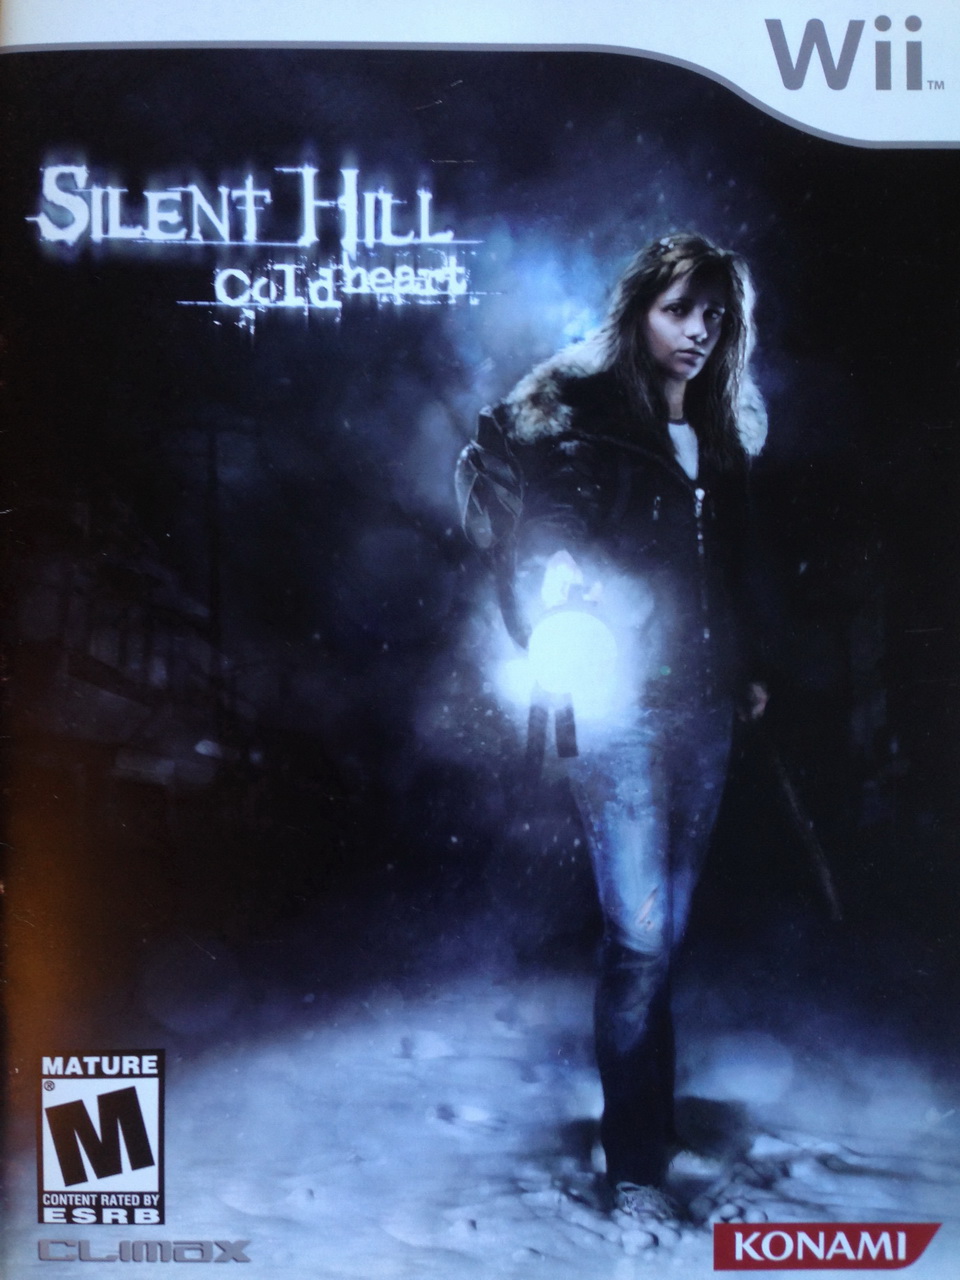 Silent Hill: Shattered Memories - Silent Hill Memories